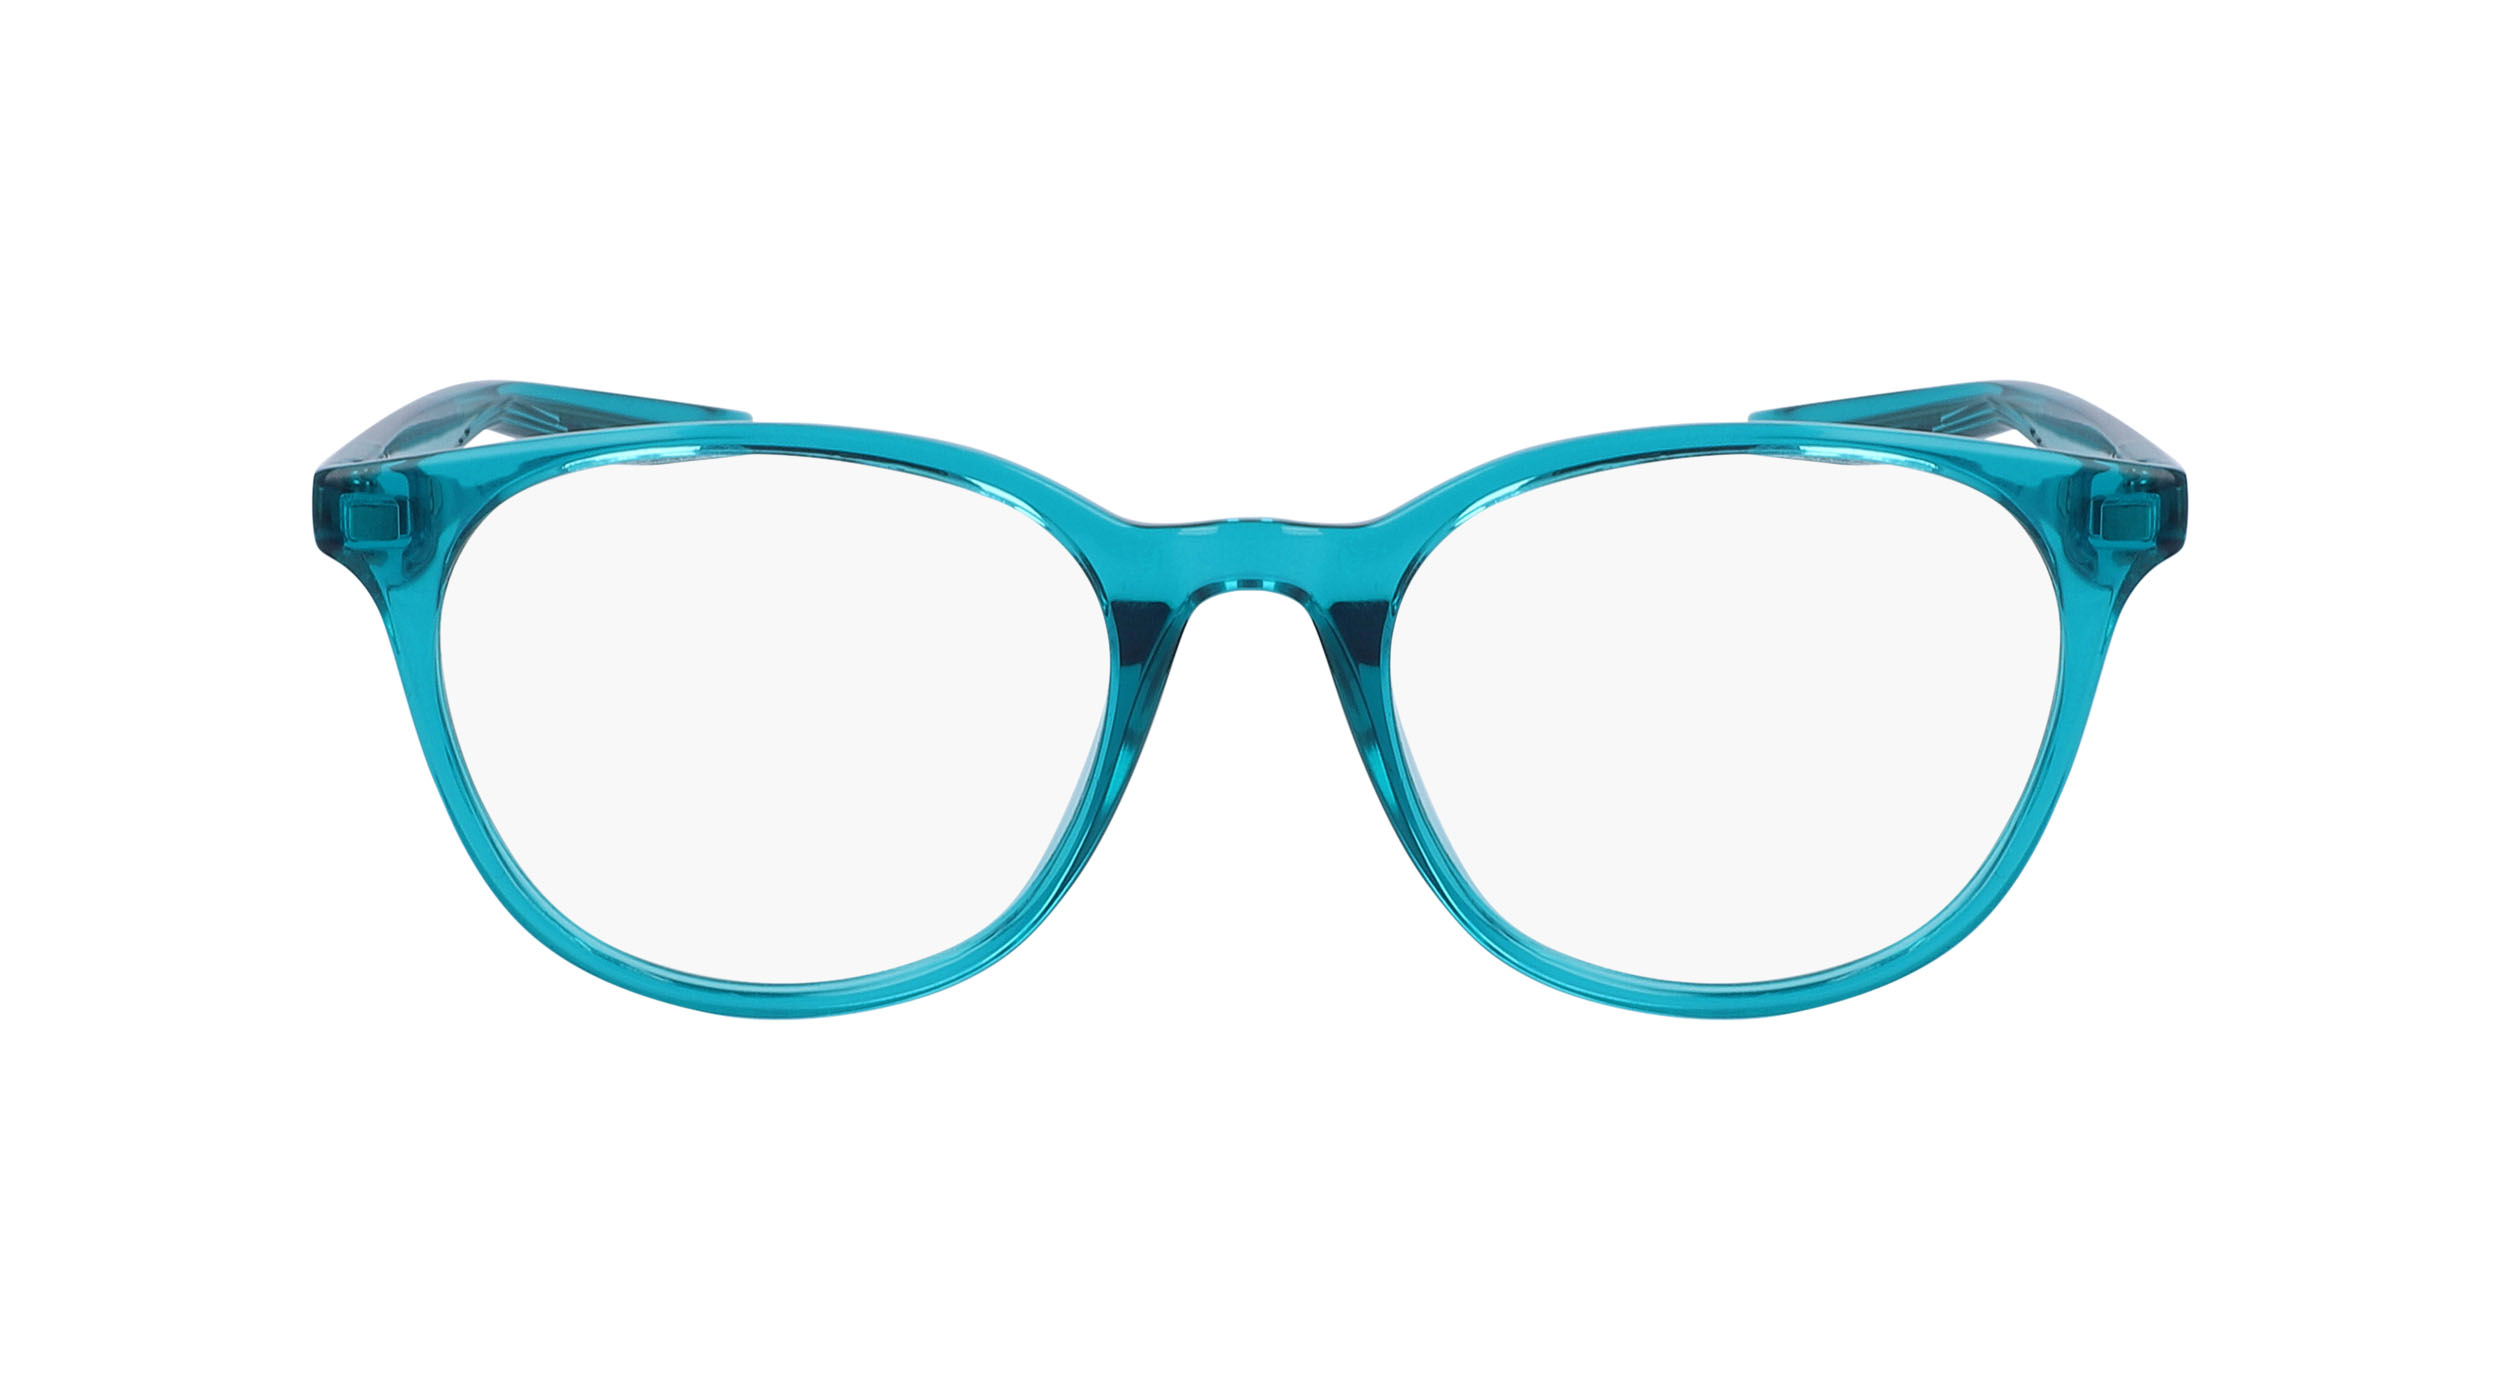 Glasses Nike 5020, turquoise colour - Doyle